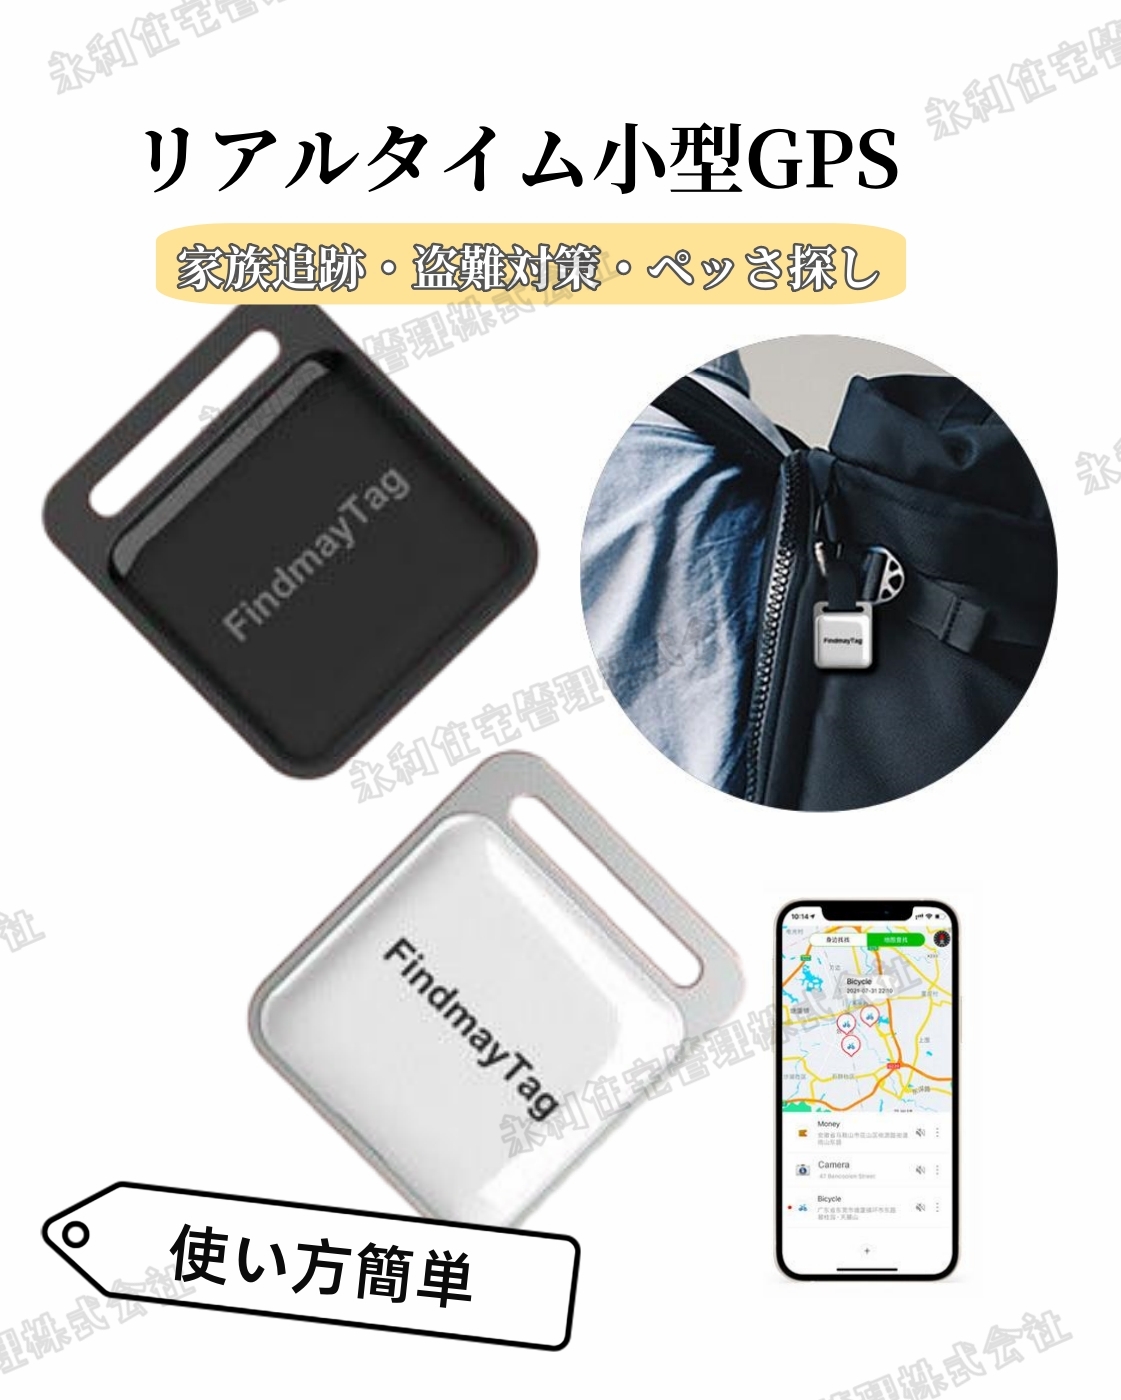 【GPS発信機】超小型GPS 月額不要 家族追跡 盗難対策 ペット探し 日本語説明書付き 迷子防止 防水